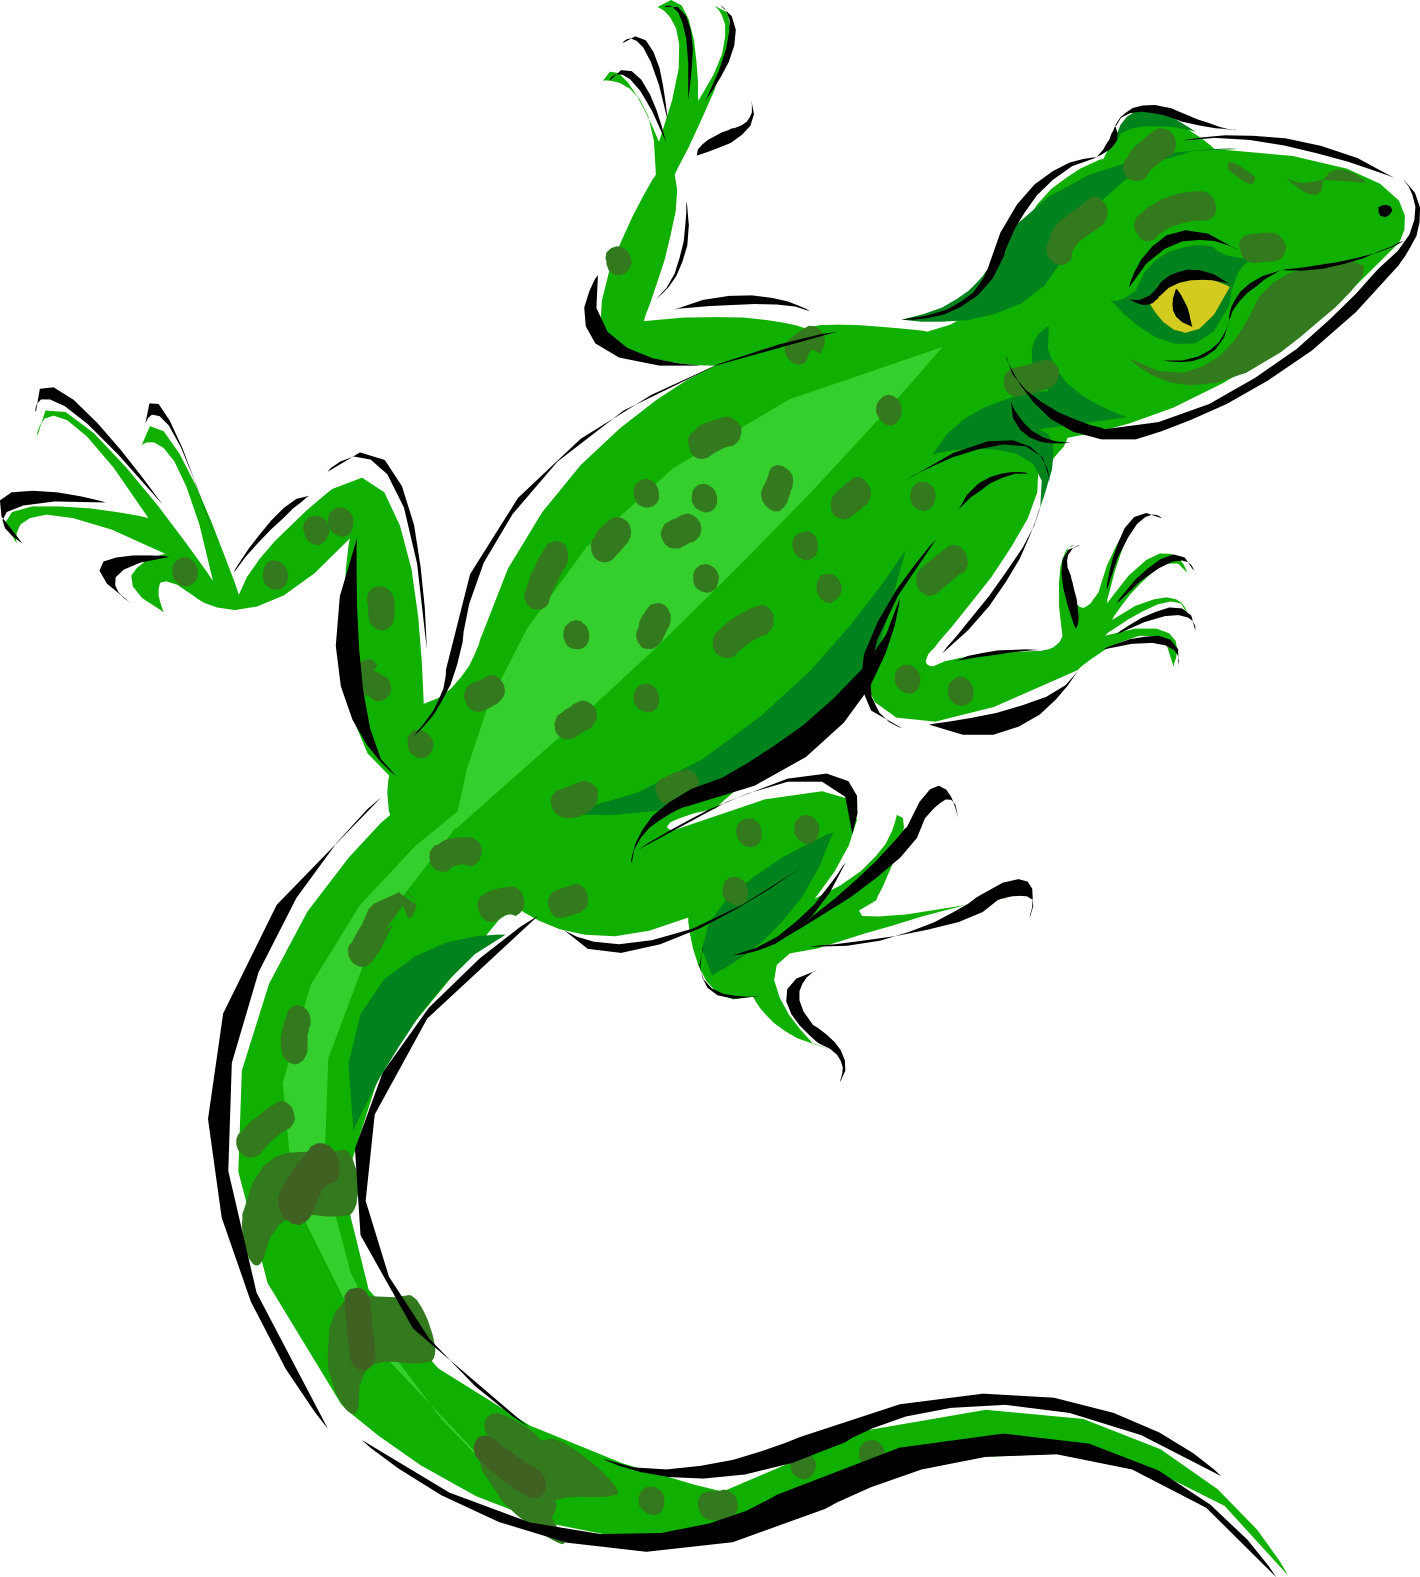 Green Lizard Illustration.png PNG